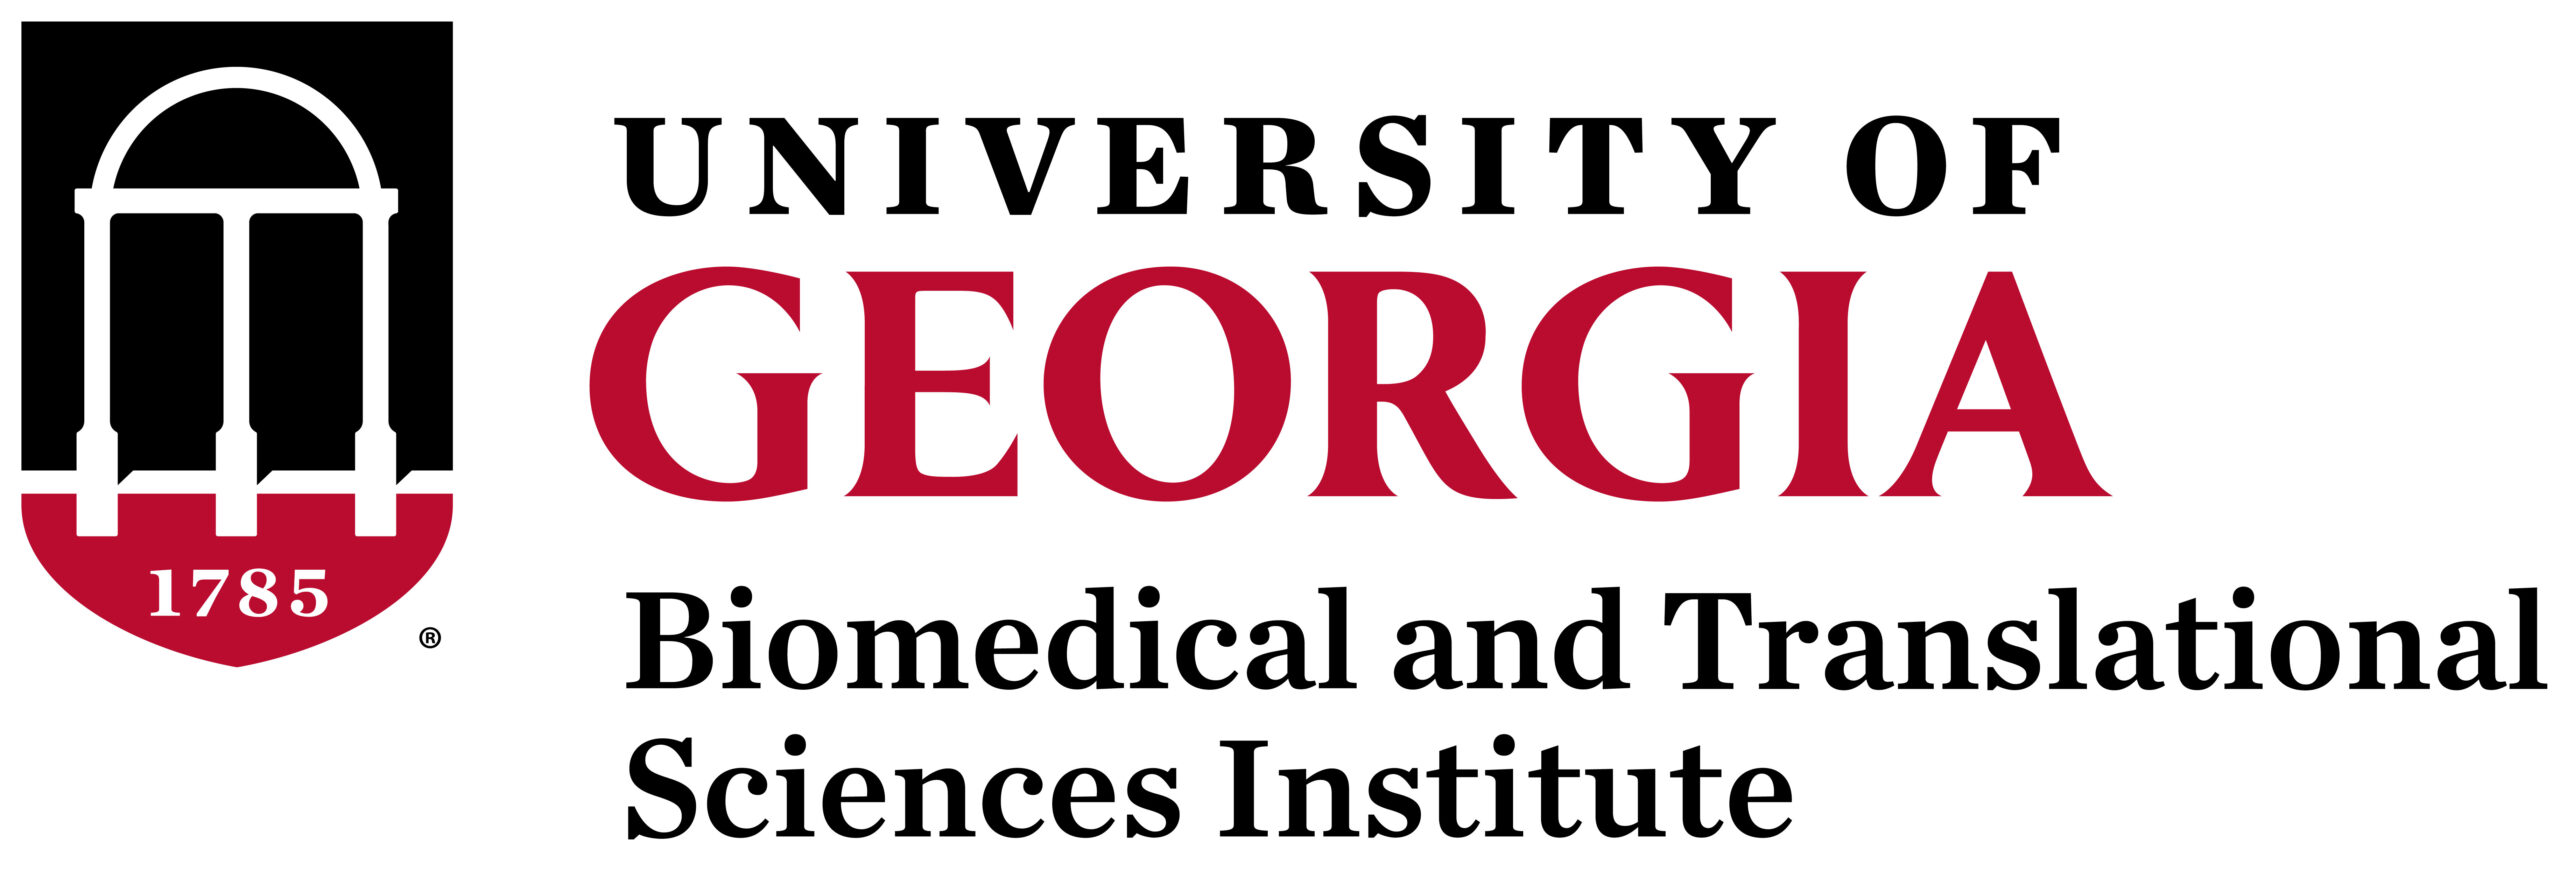 University of Georgia Biomedical and Translational Sciences Institute